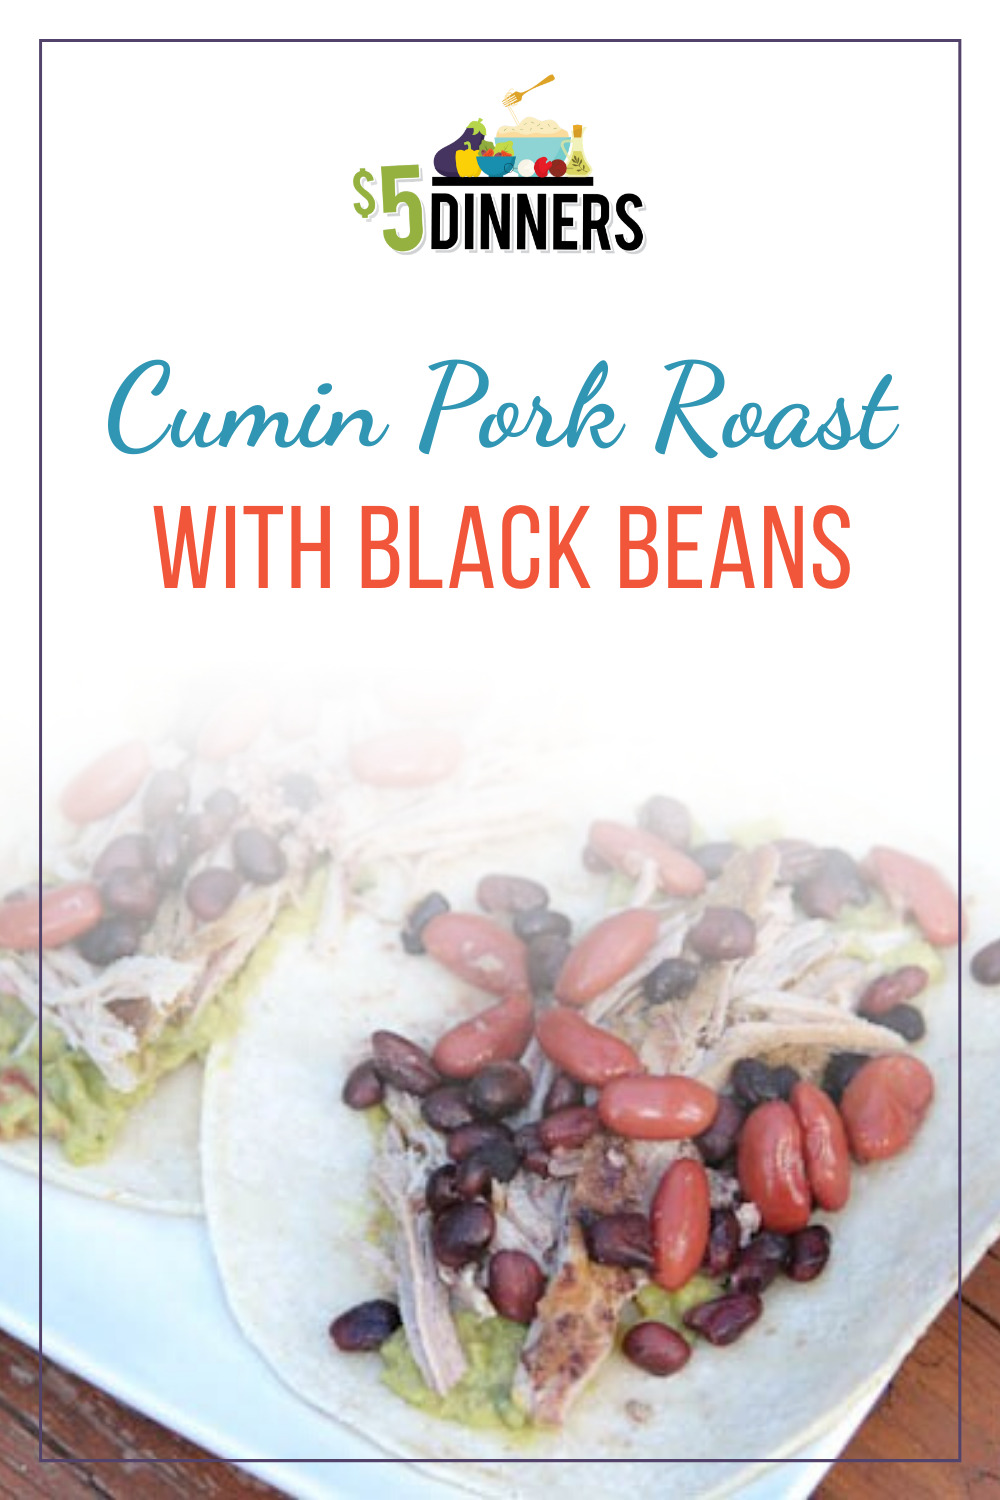 cumin pork roast with black beans